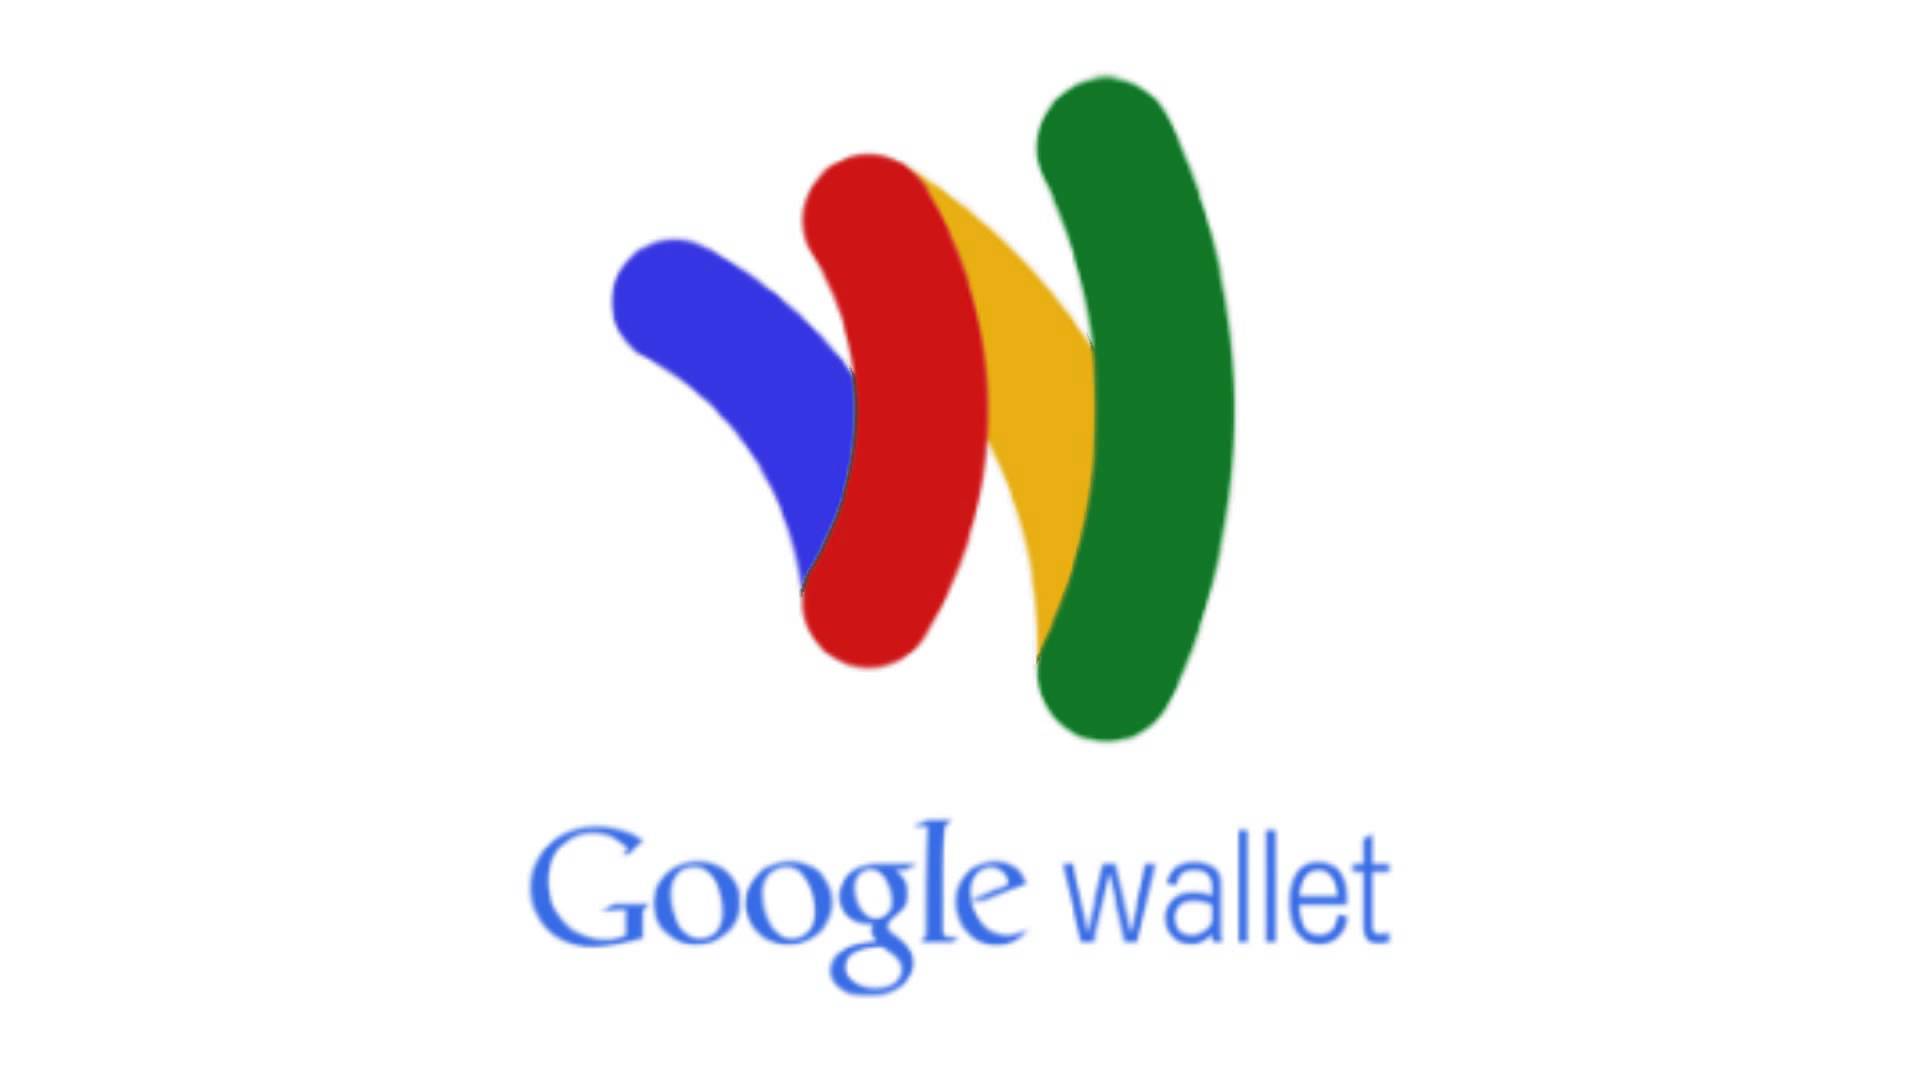 Google Wallet Logo - Google wallet Logos